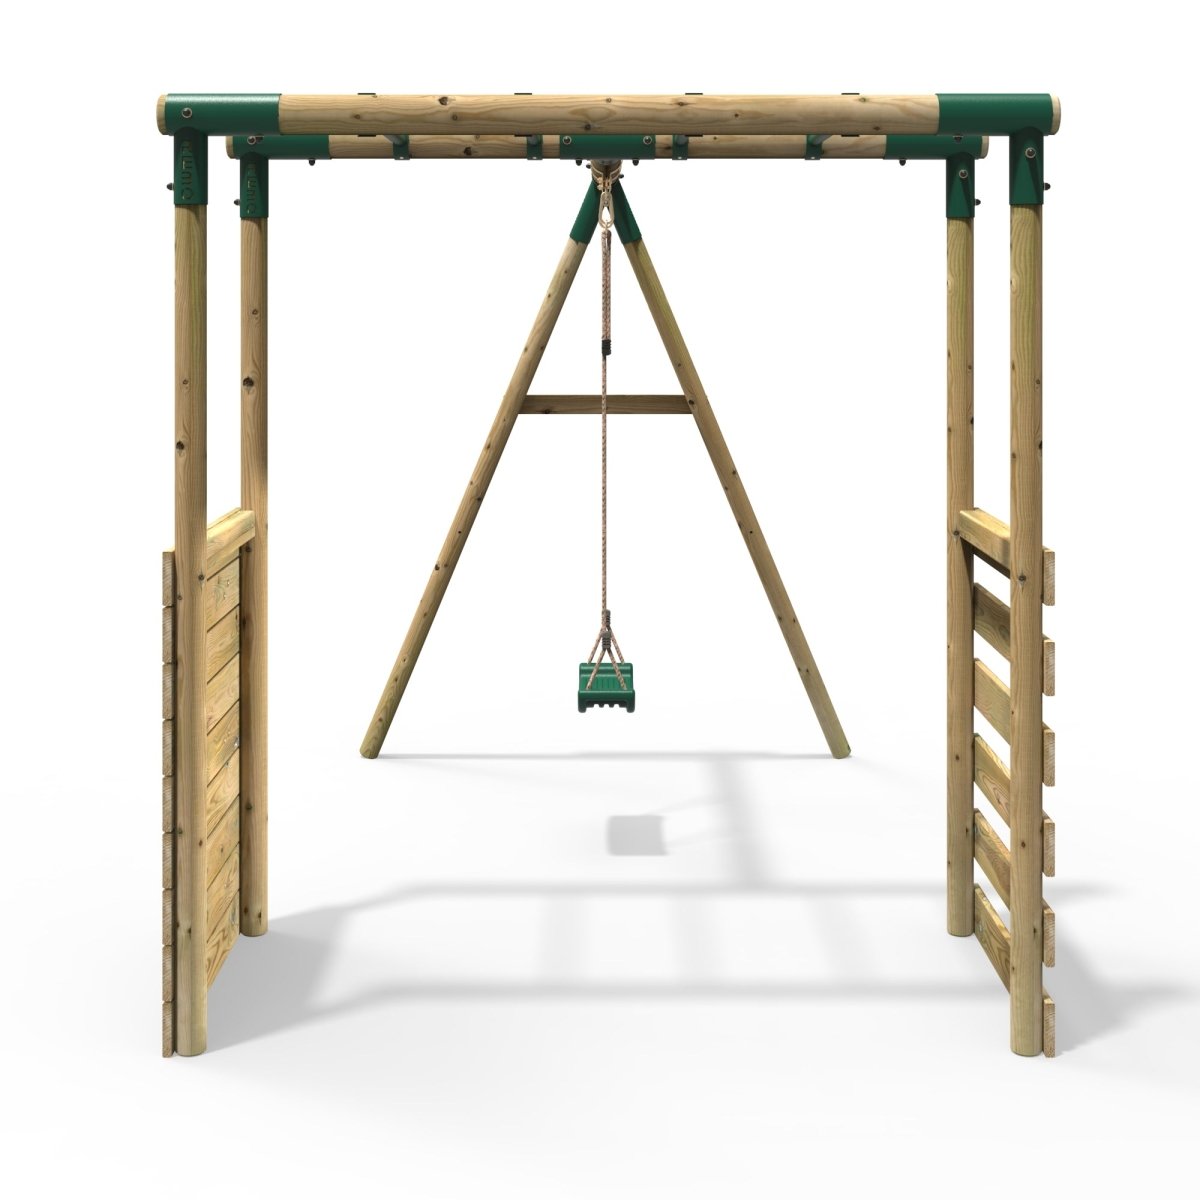 Rebo Wooden Garden Swing Set with Monkey Bars - Solar Green